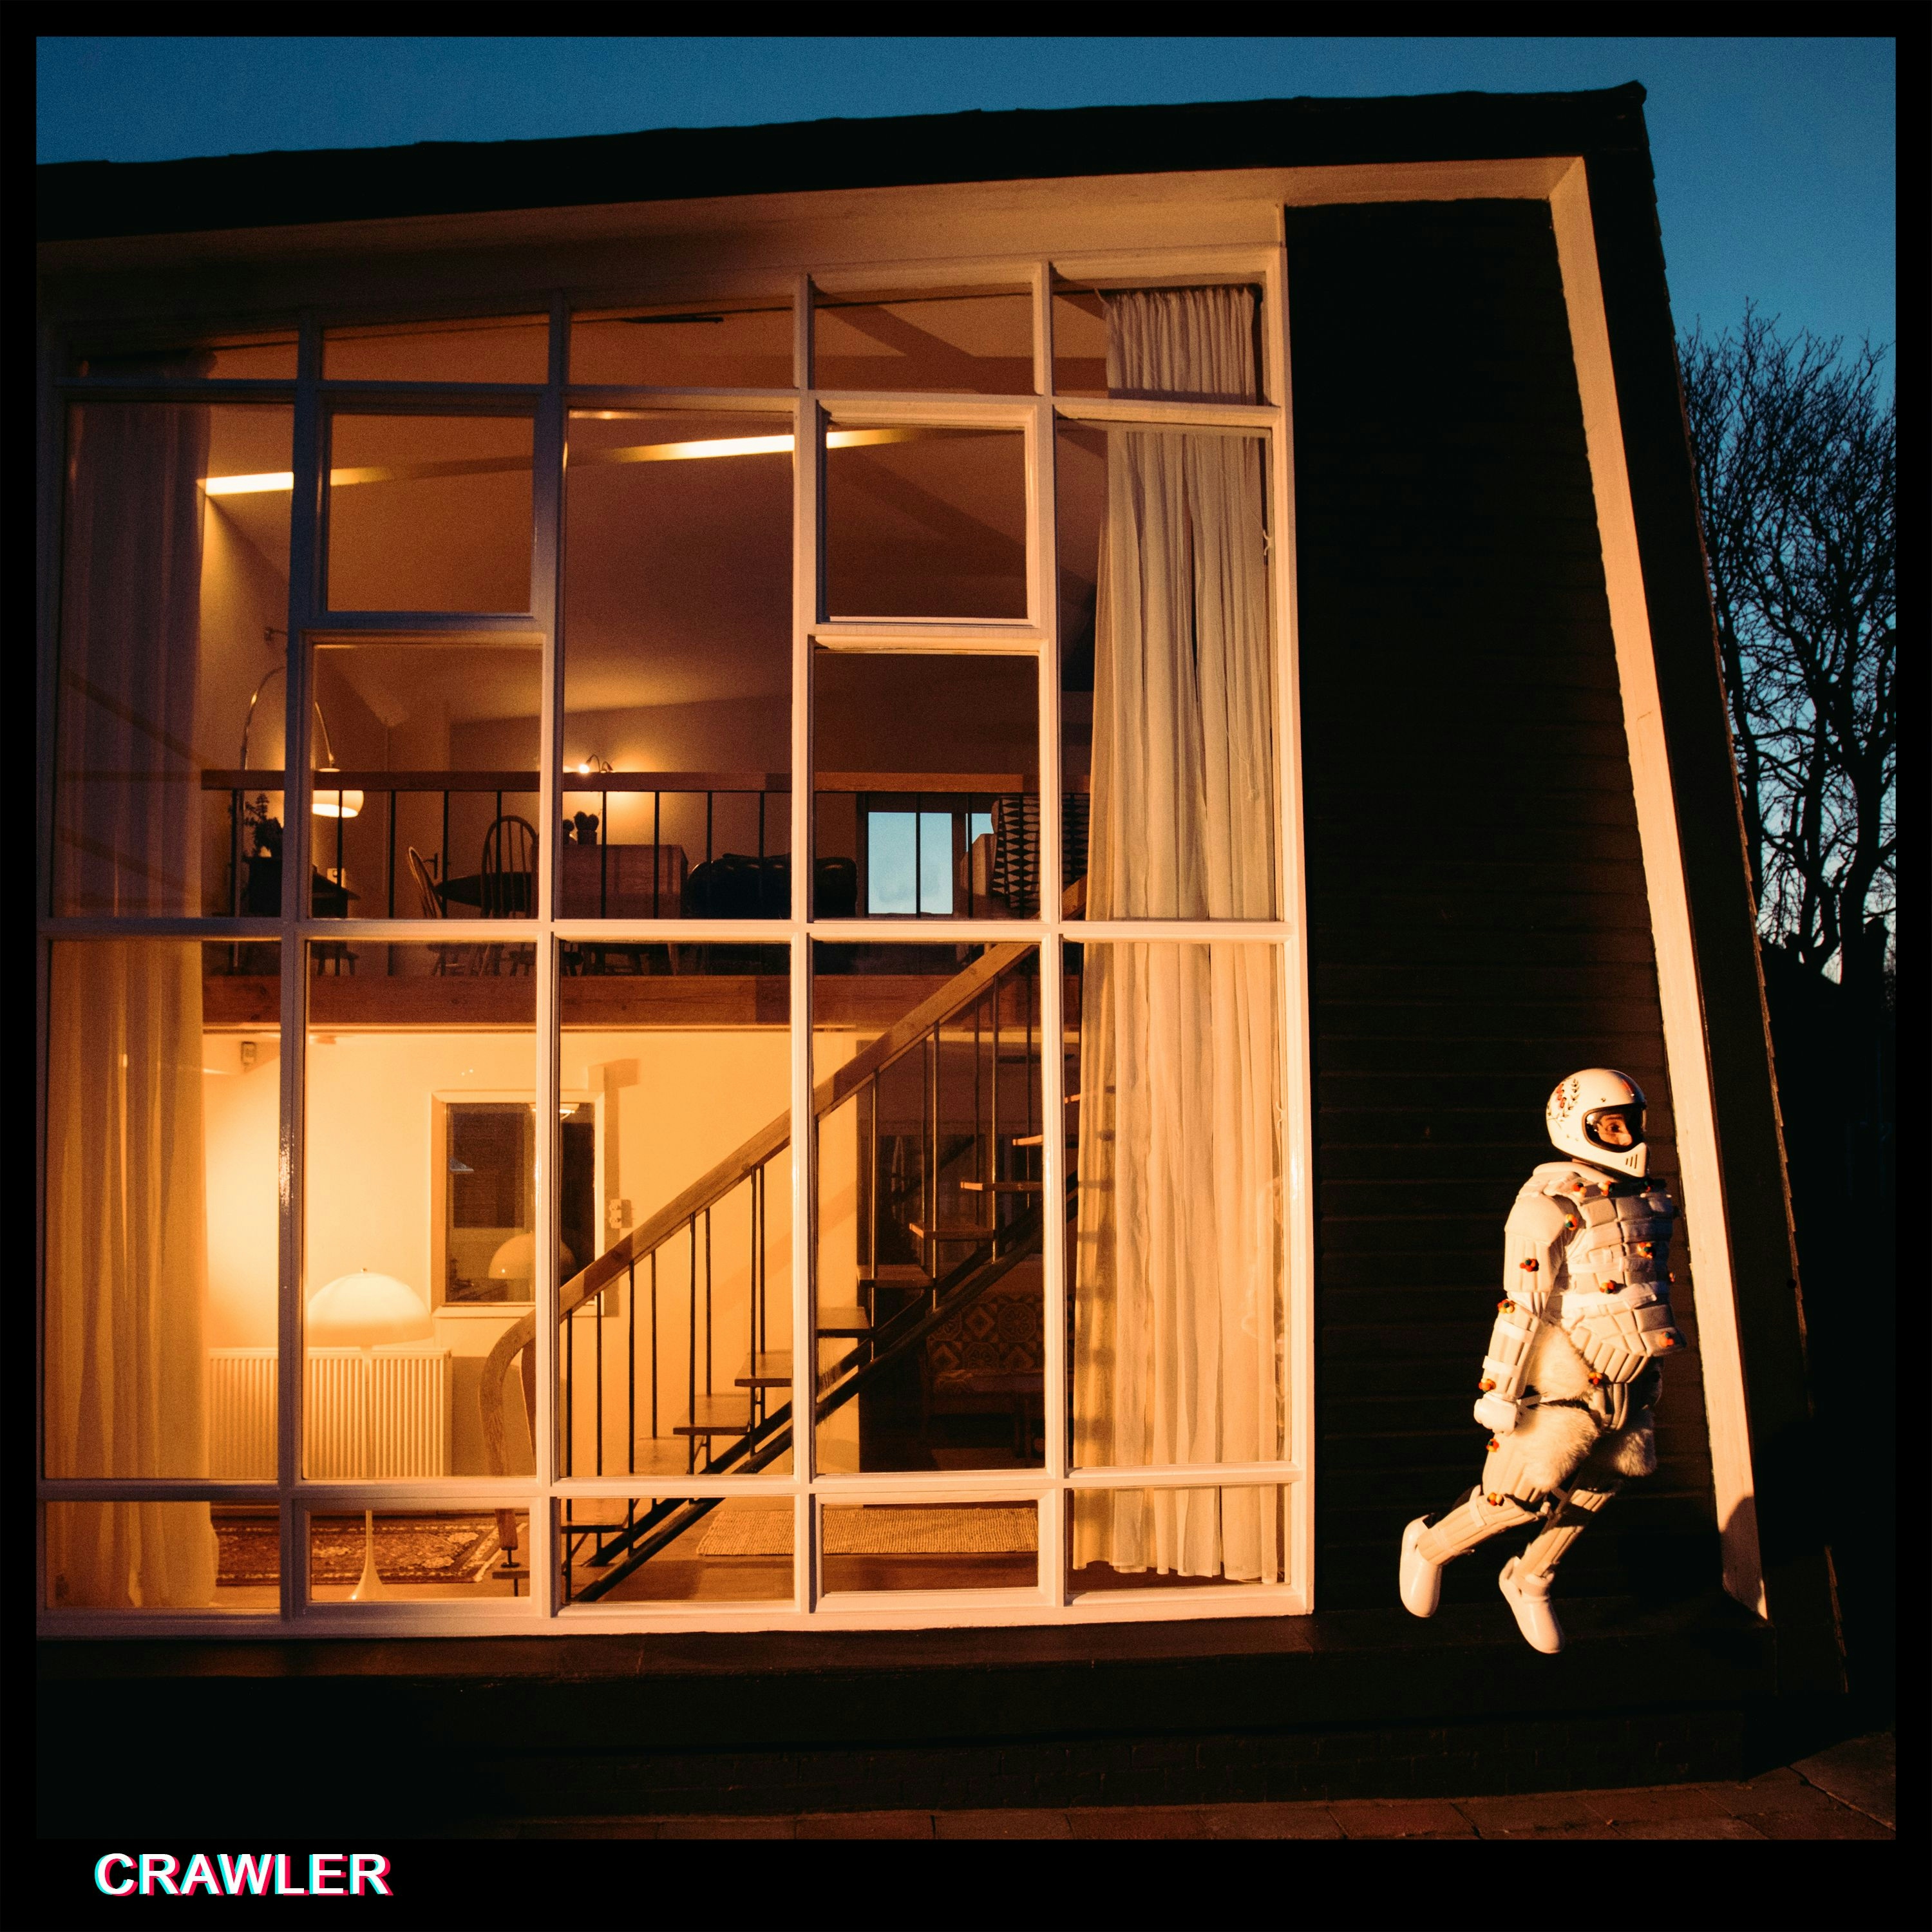 Album artwork for Crawler by IDLES